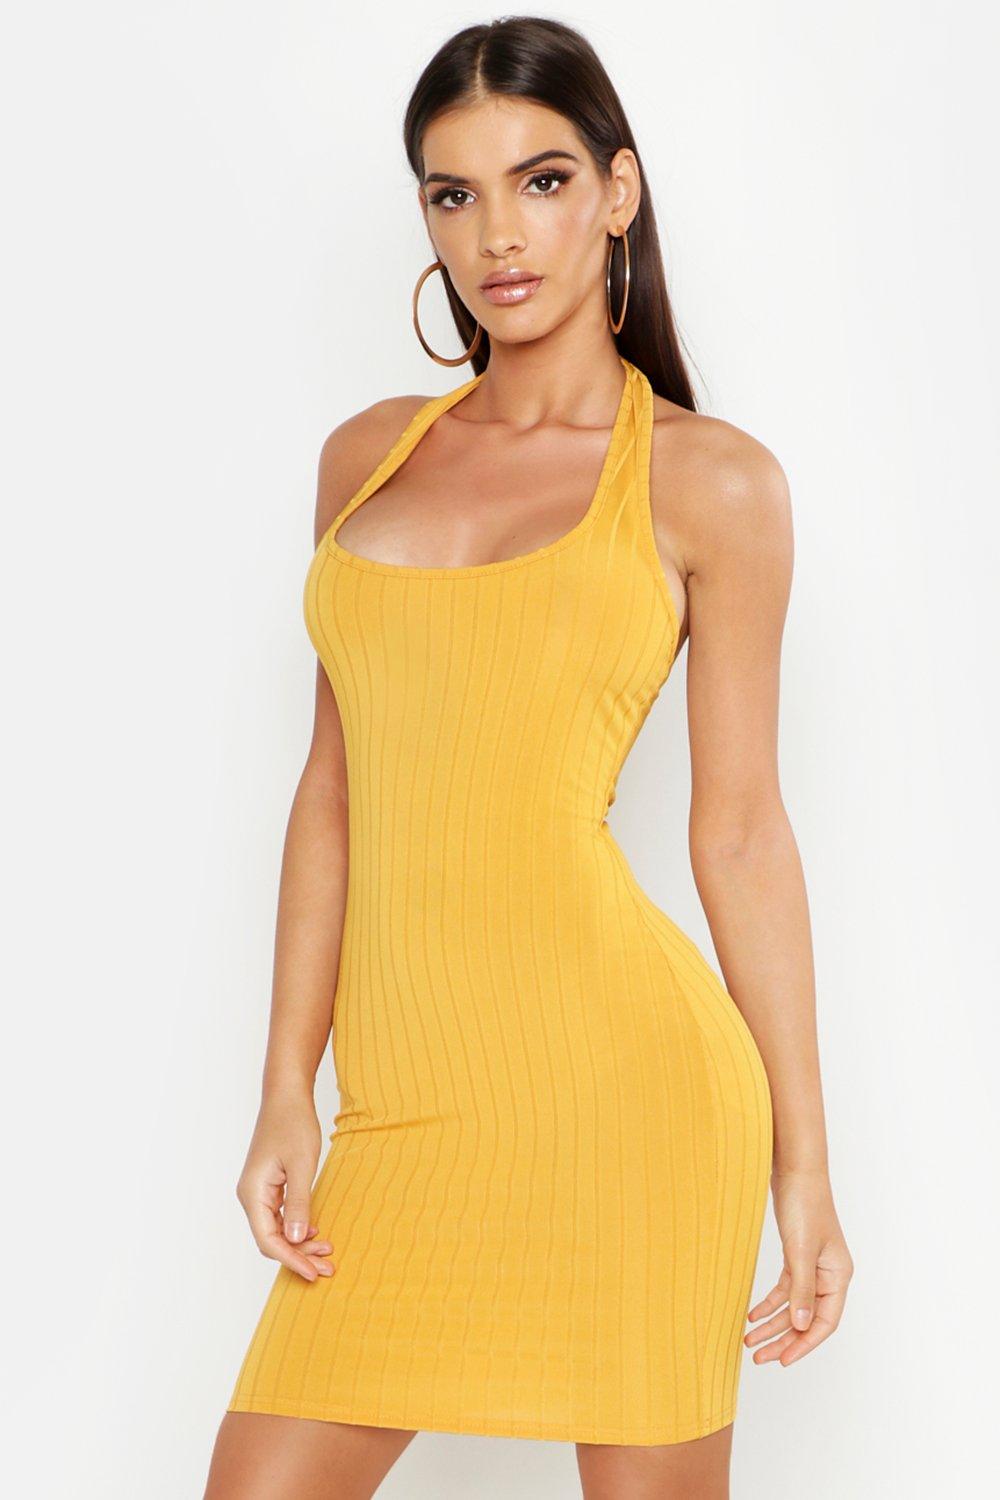 ribbed yellow dress